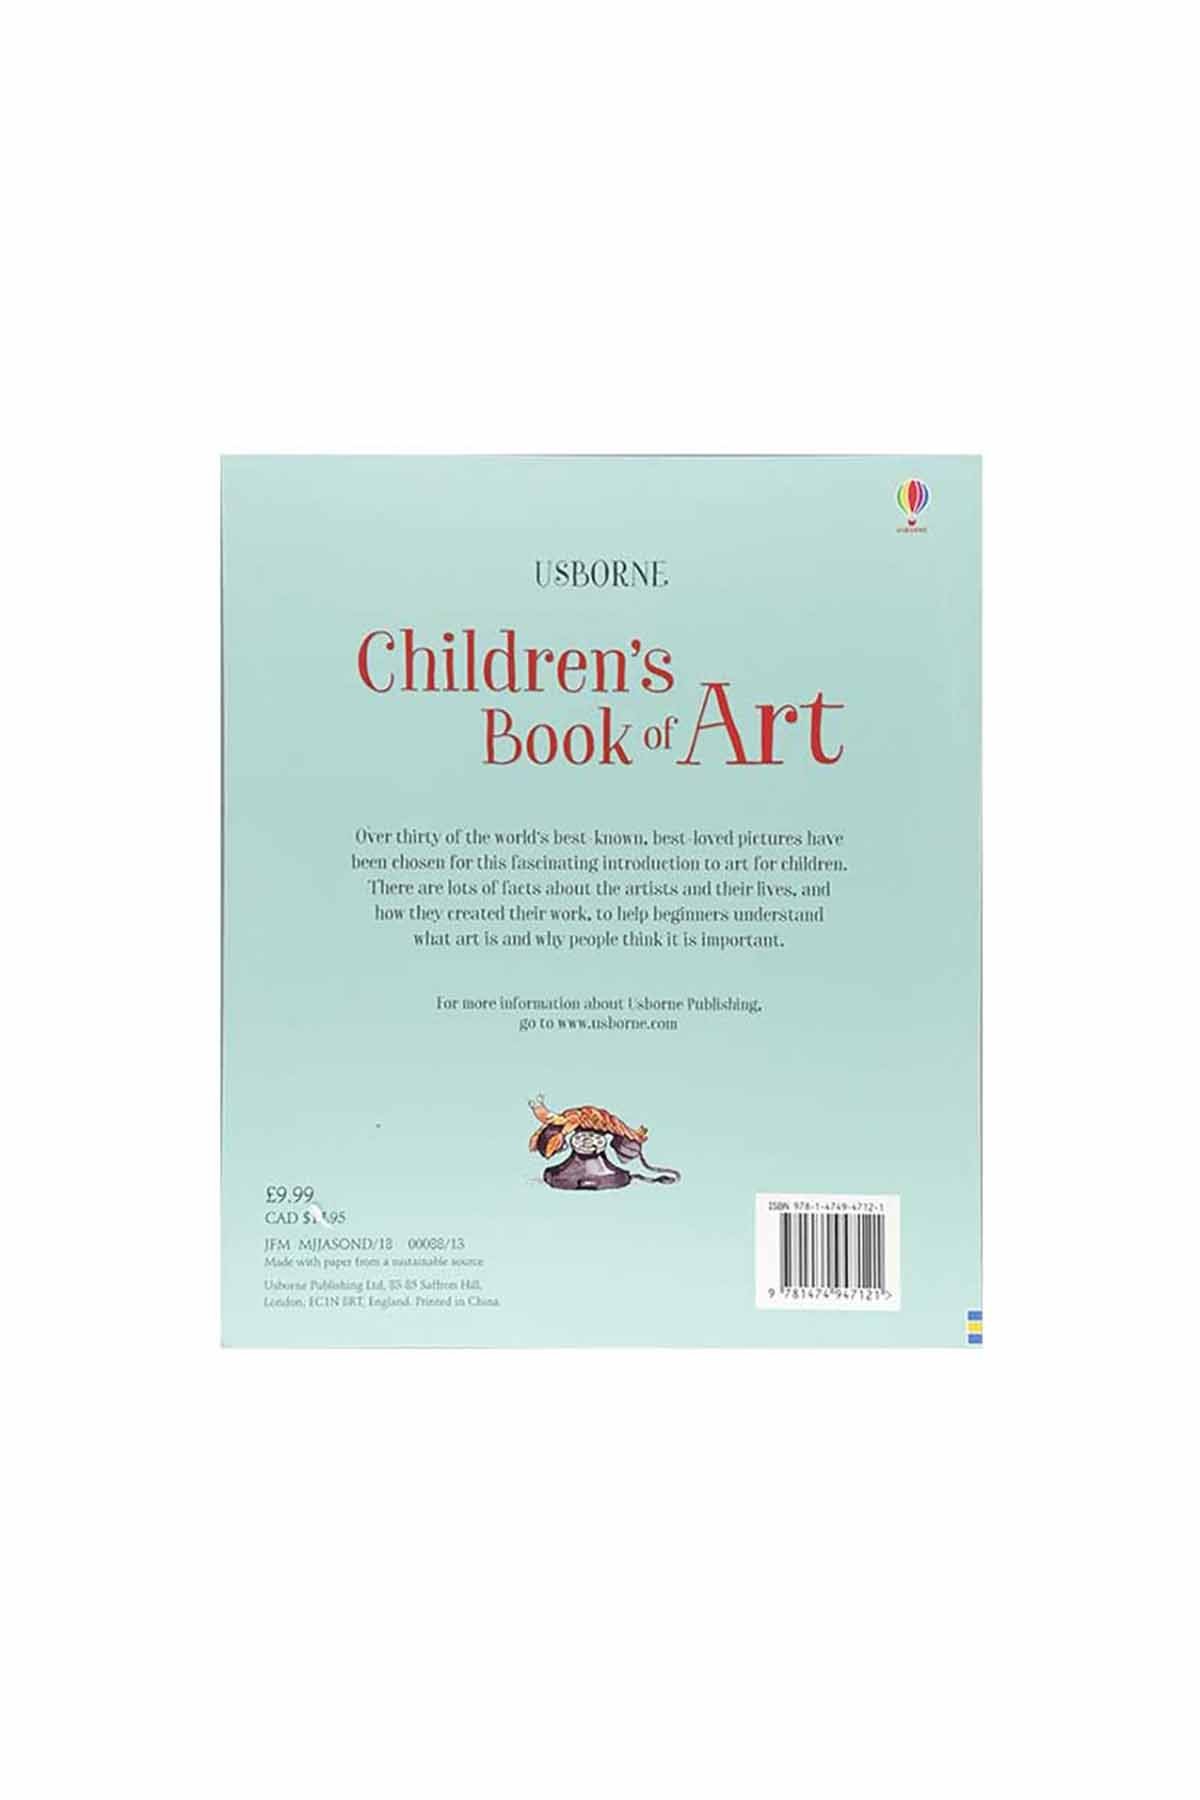 The Usborne Children's Book of Art